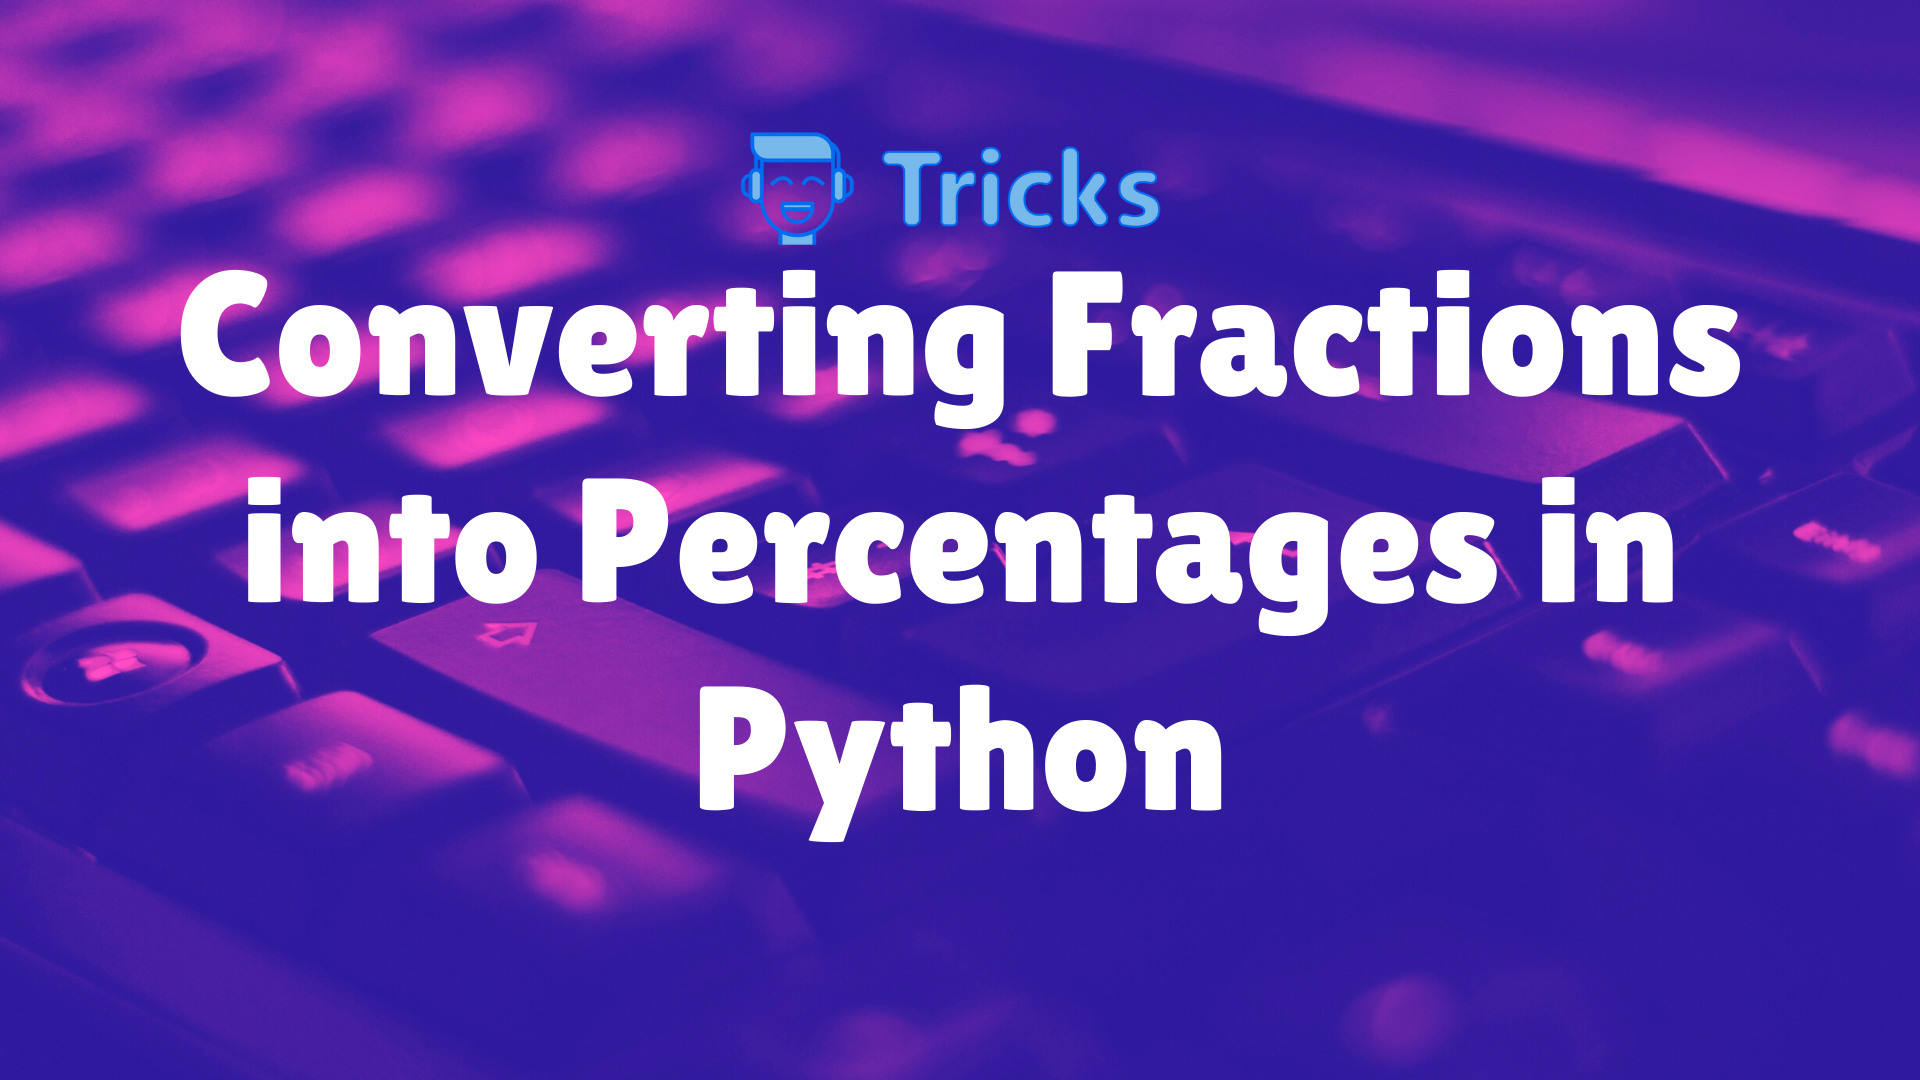 Convertir fracciones a porcentajes en Python